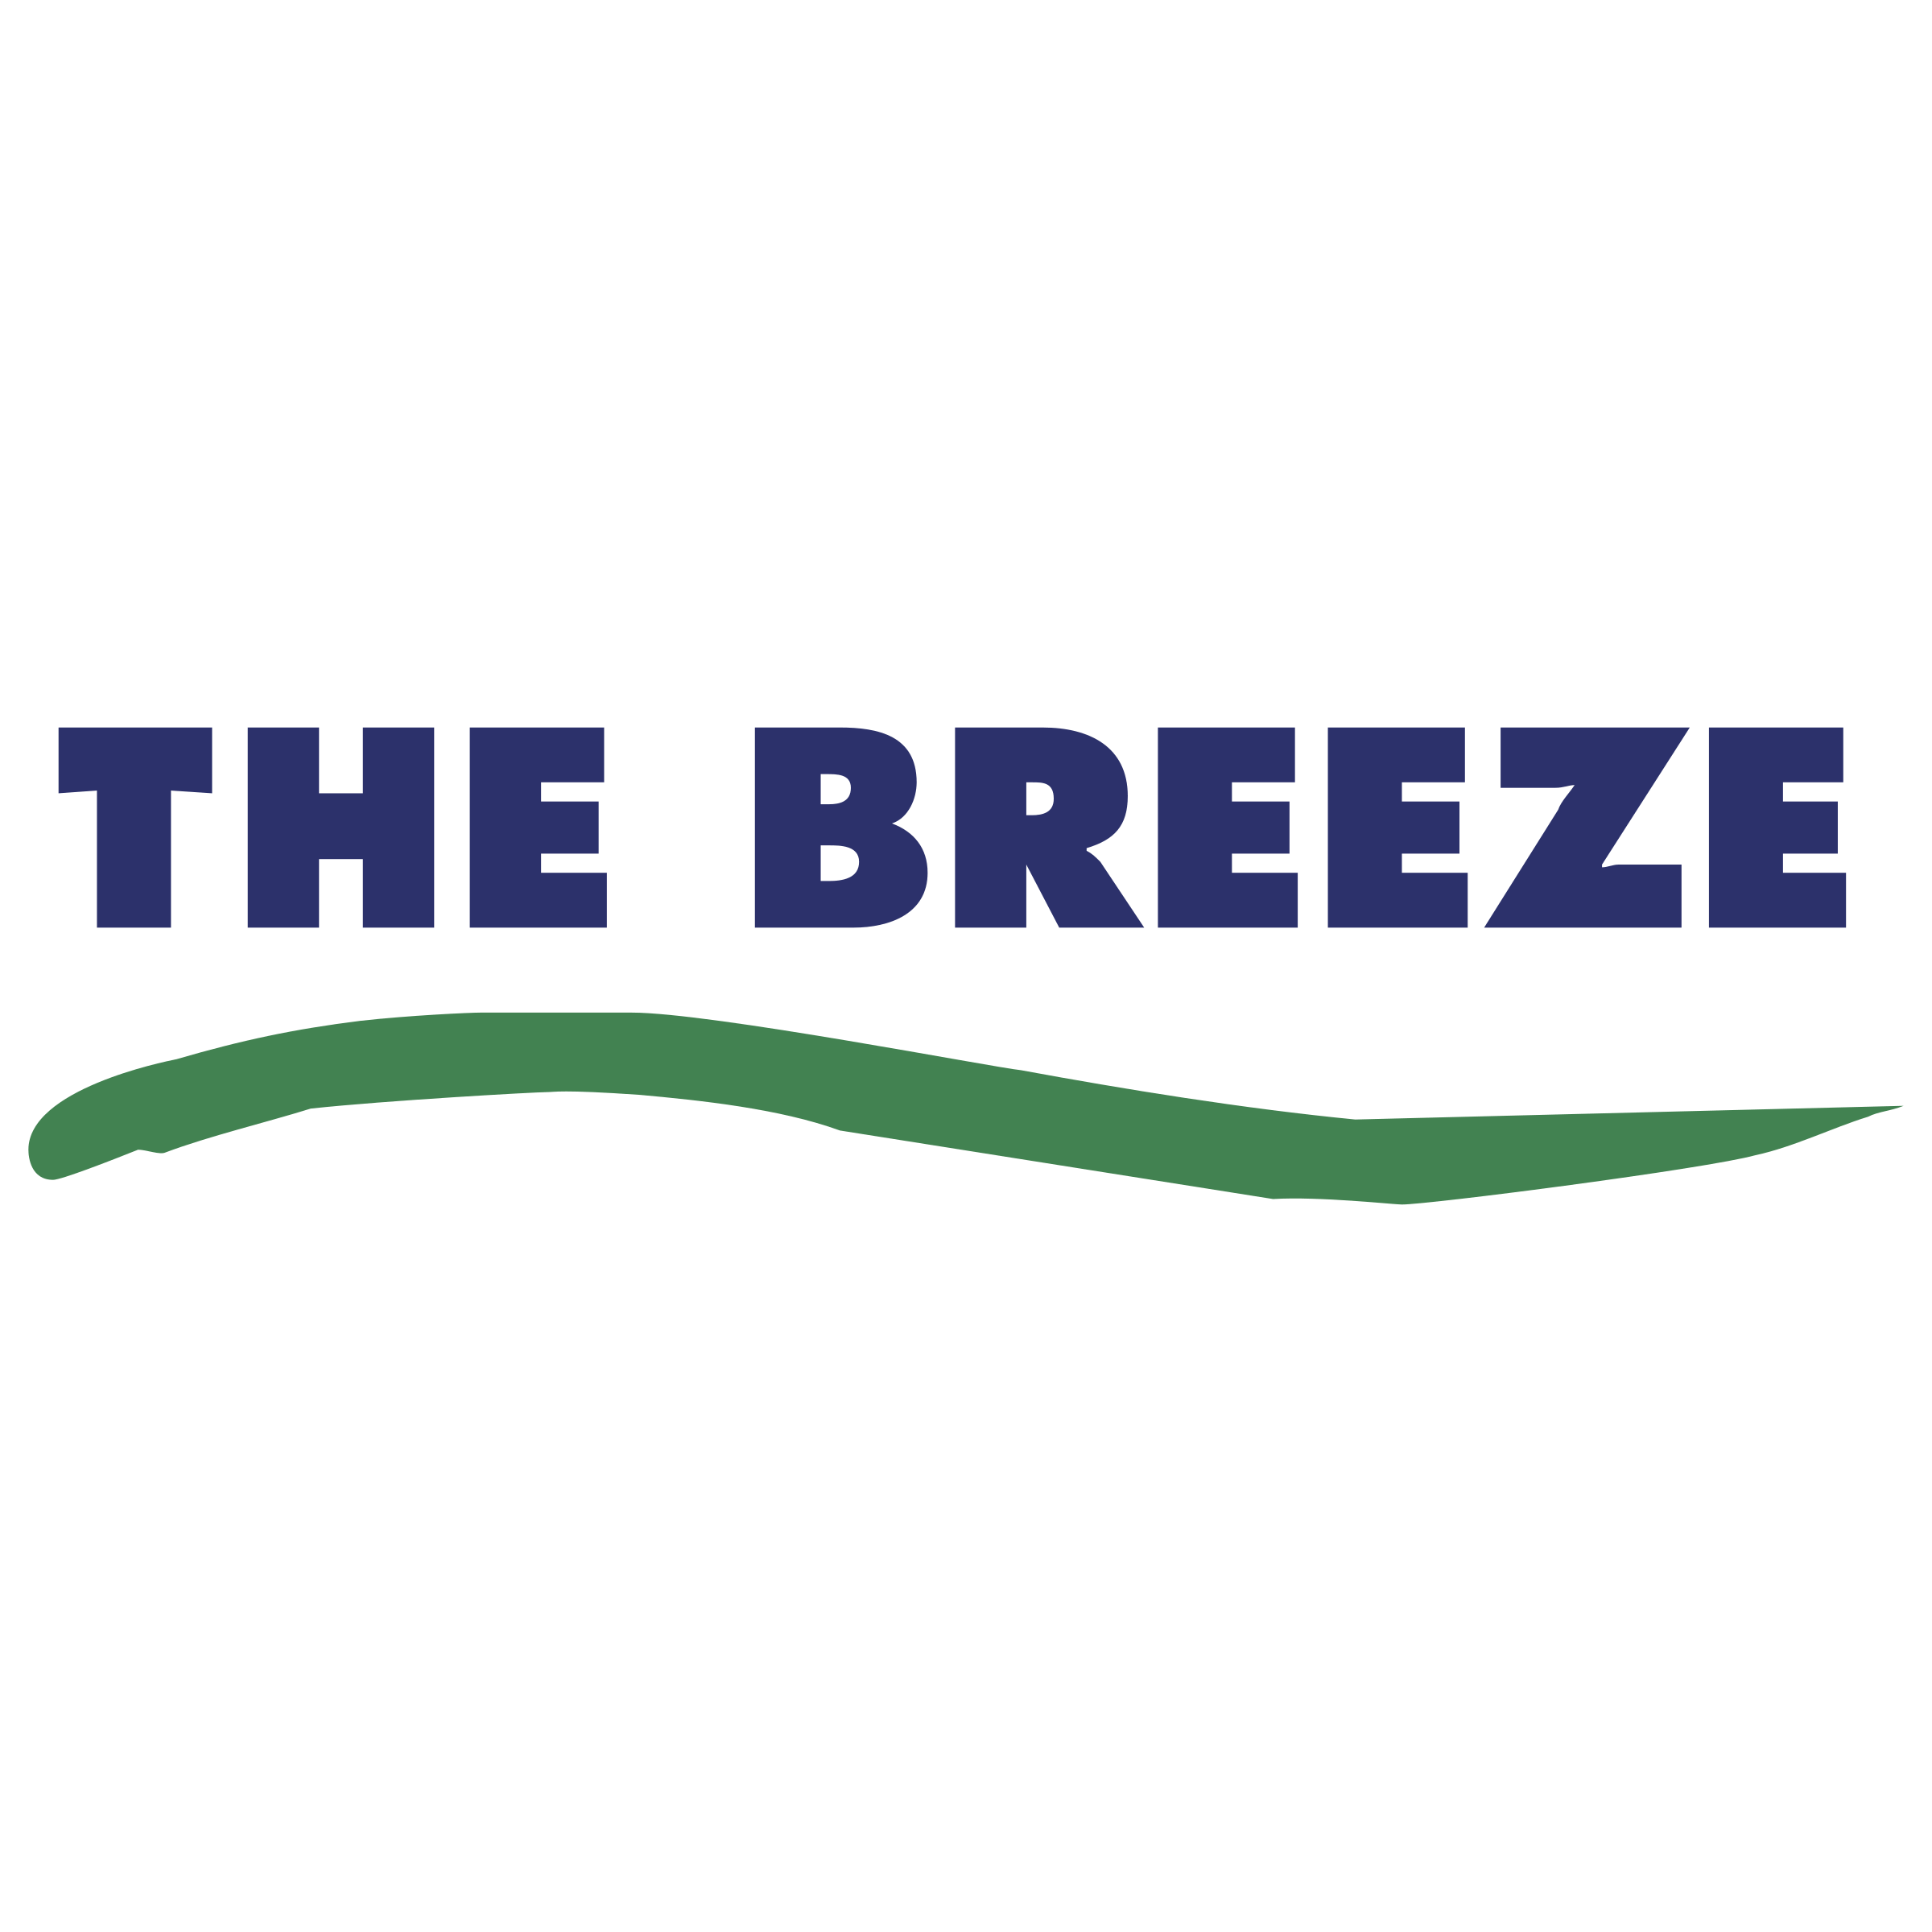 Breeze Logo - The Breeze Logo PNG Transparent & SVG Vector - Freebie Supply